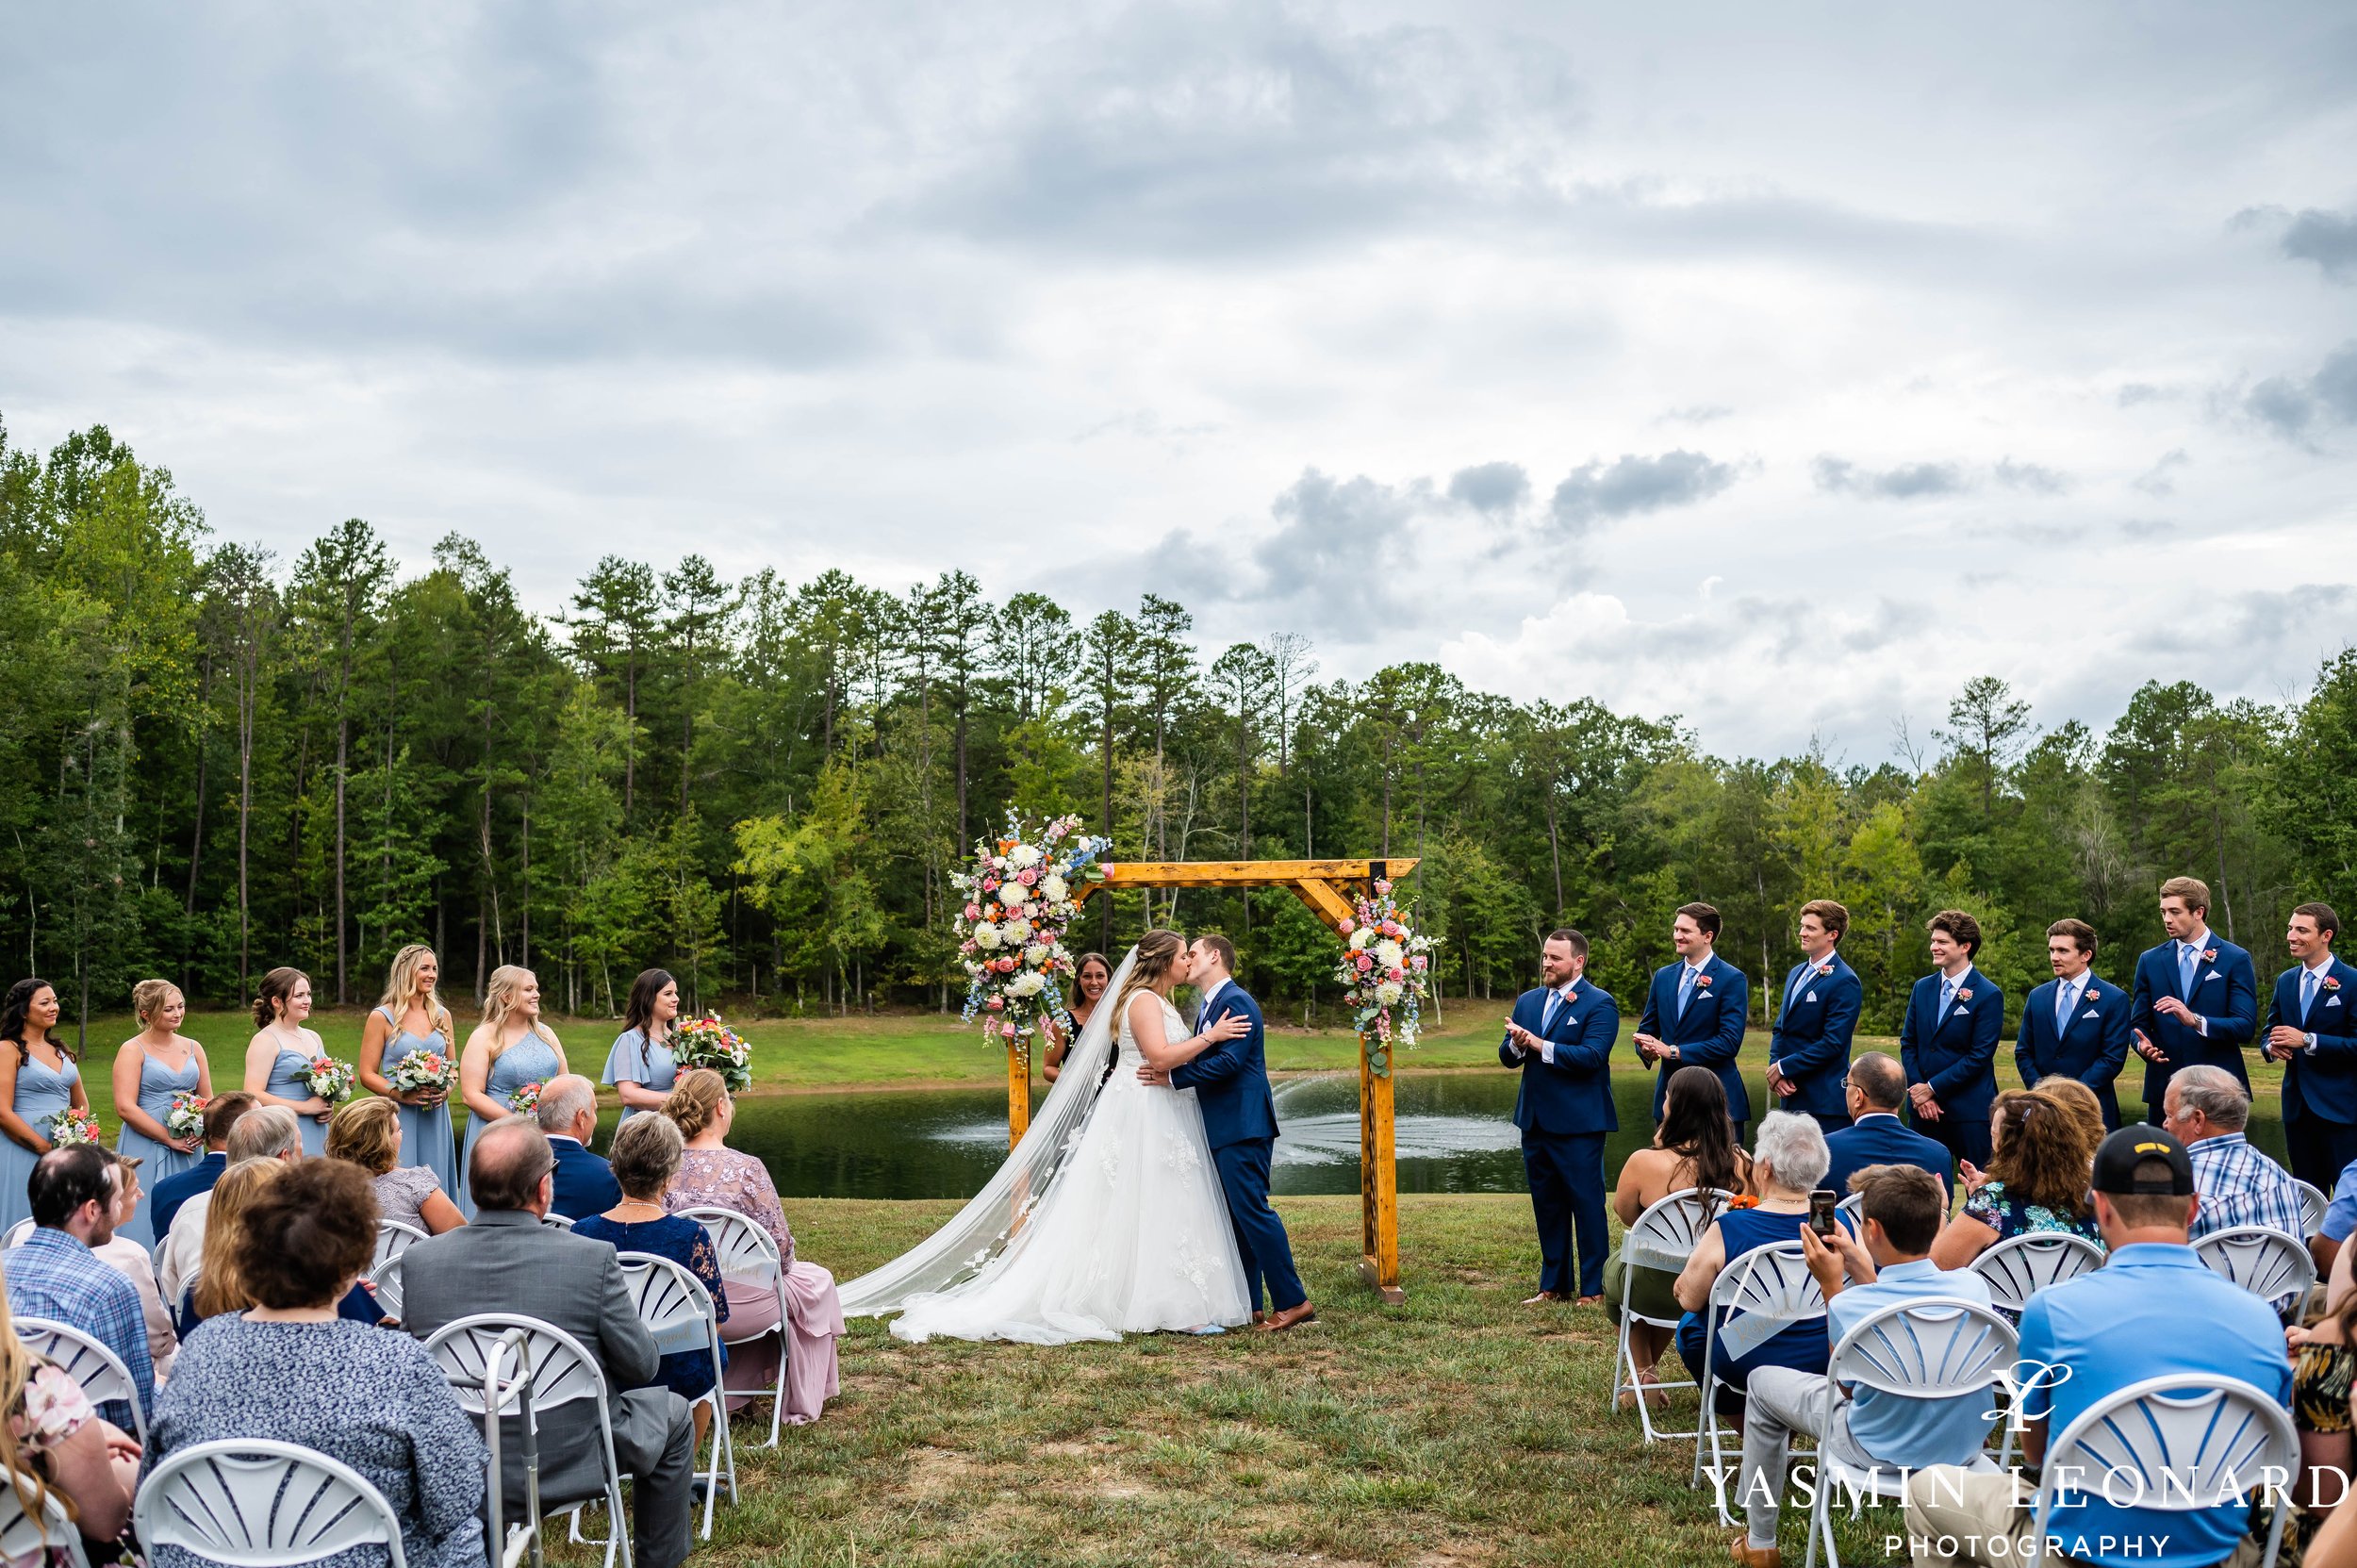 Secret Meadows at Green Dell Farm - Wedding in Thomasville - Barn Wedding in the Triad - High Point Wedding Photographer - Yasmin Leonard Photography -23.jpg